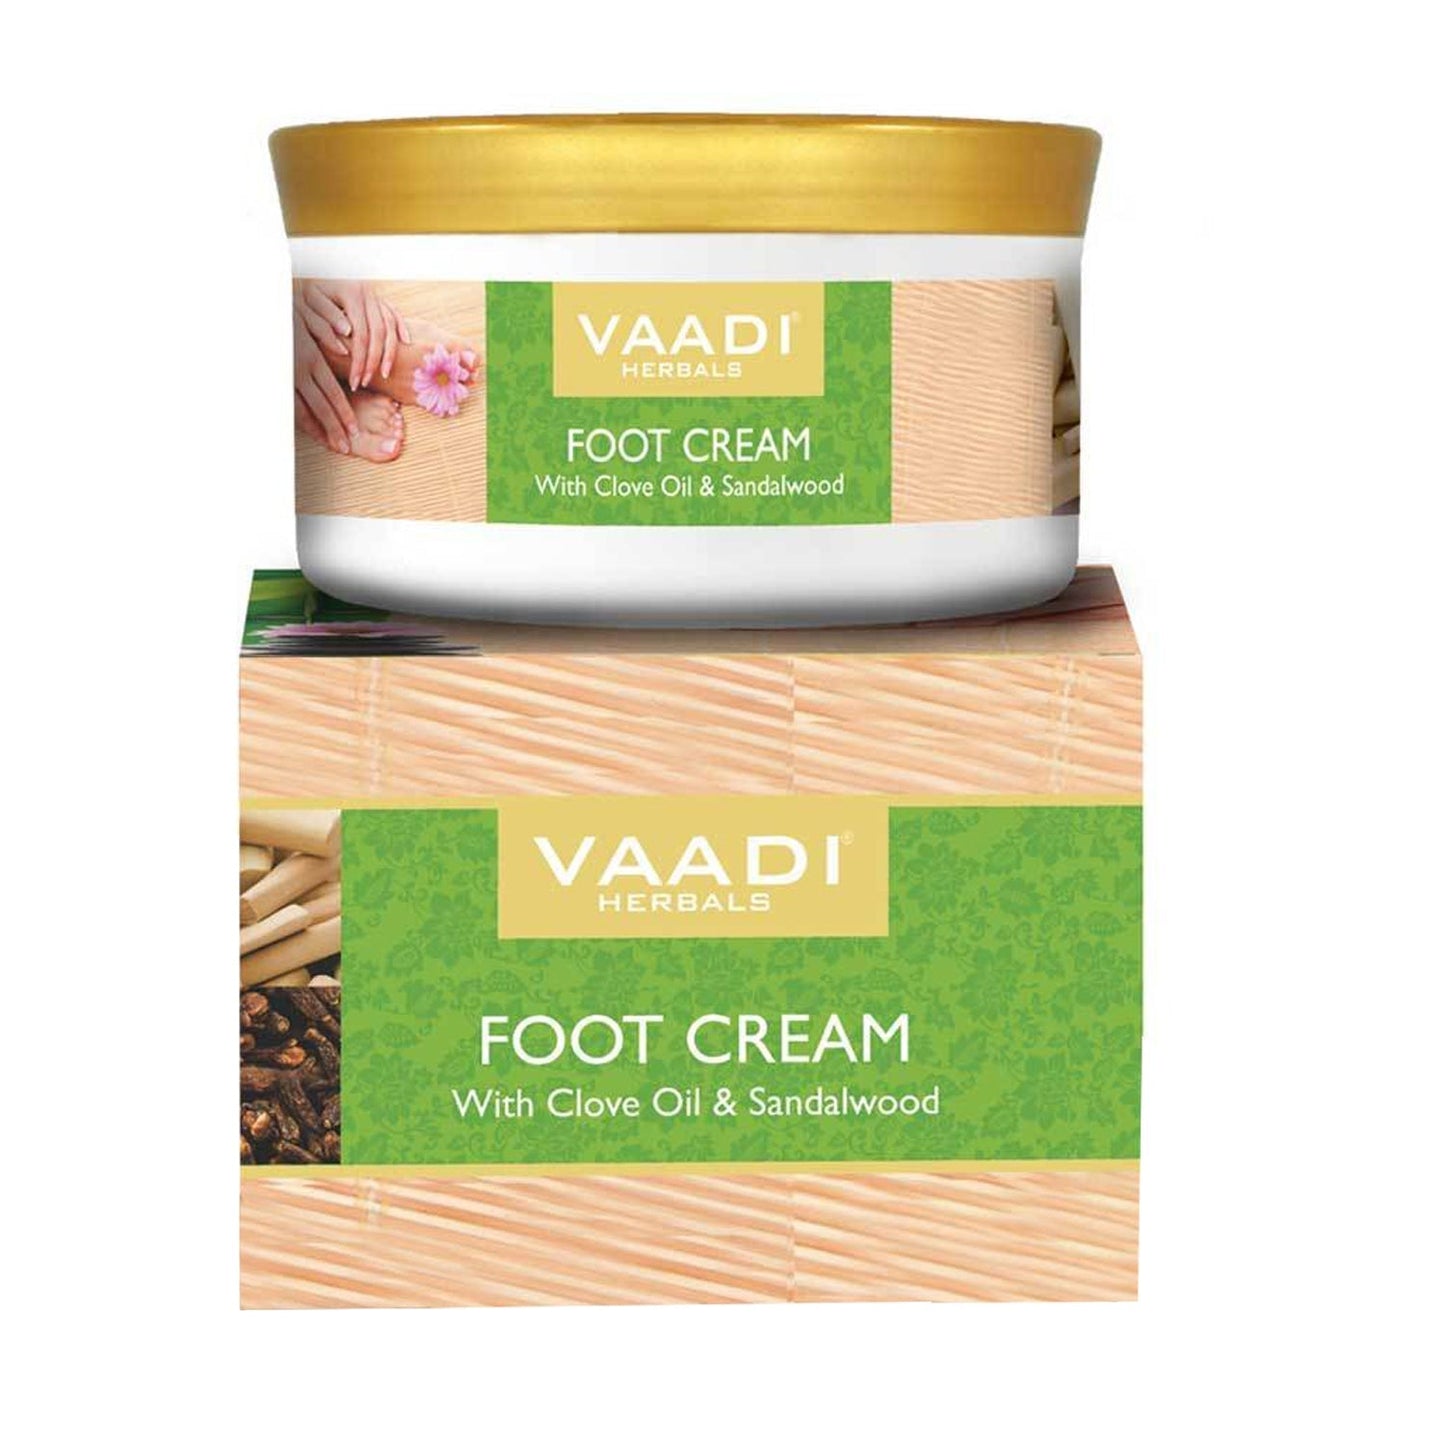 Organic Foot Cream with Clove & Sandalwood Oil - Softens Dry & Cracked Feet (150 gms / 5.29 oz)